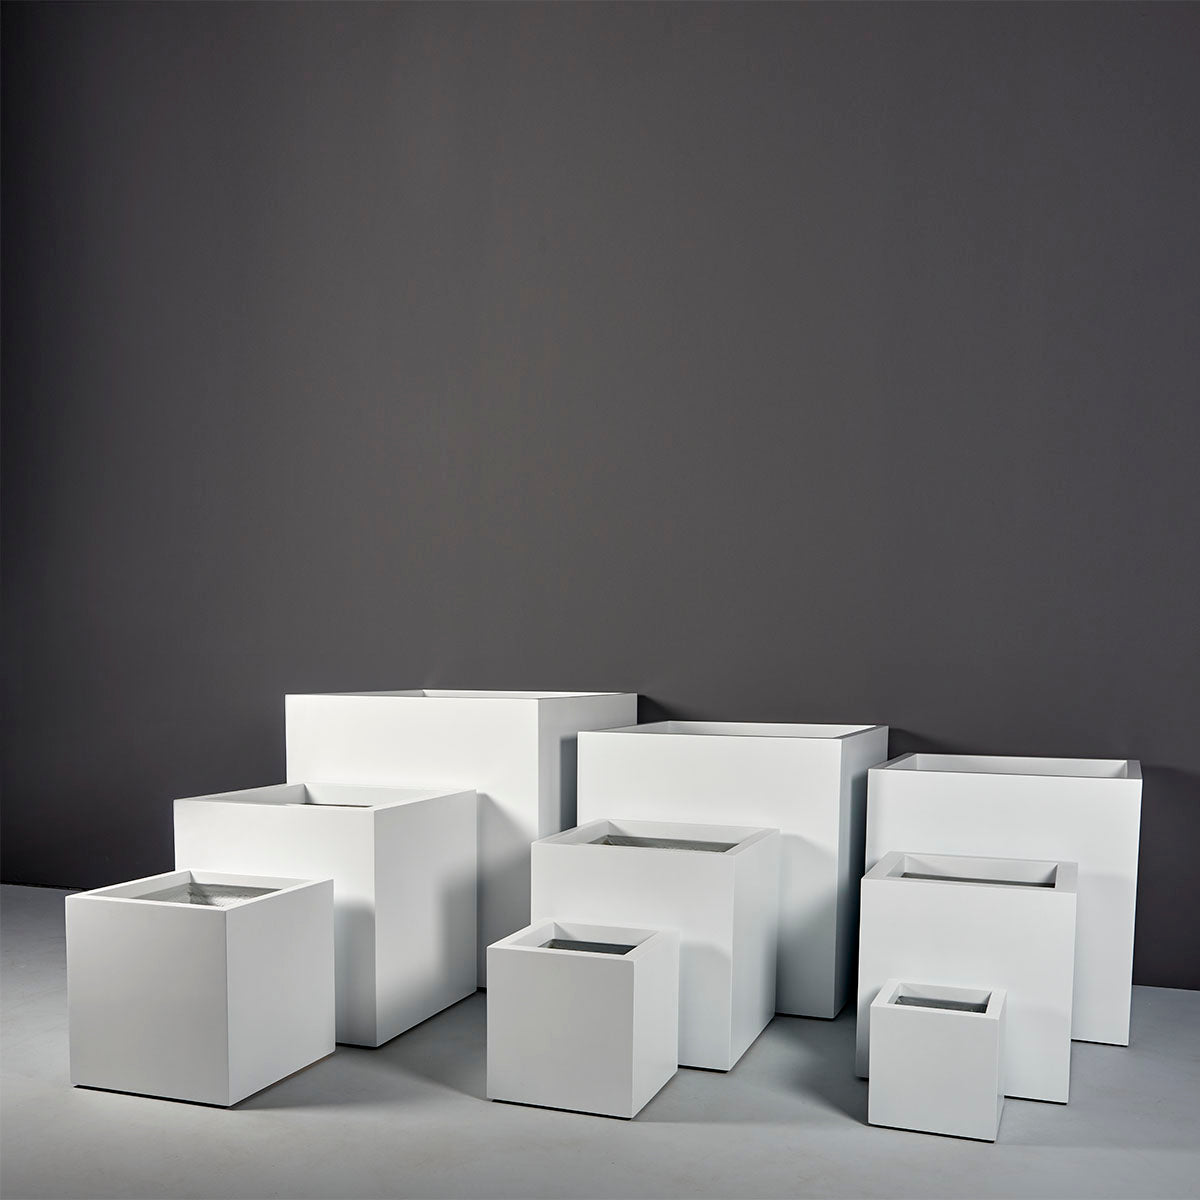 Jay Scotts Montroy Cube Fiberglass Square Planter Box - Size 60"L x 60"W x 60"H